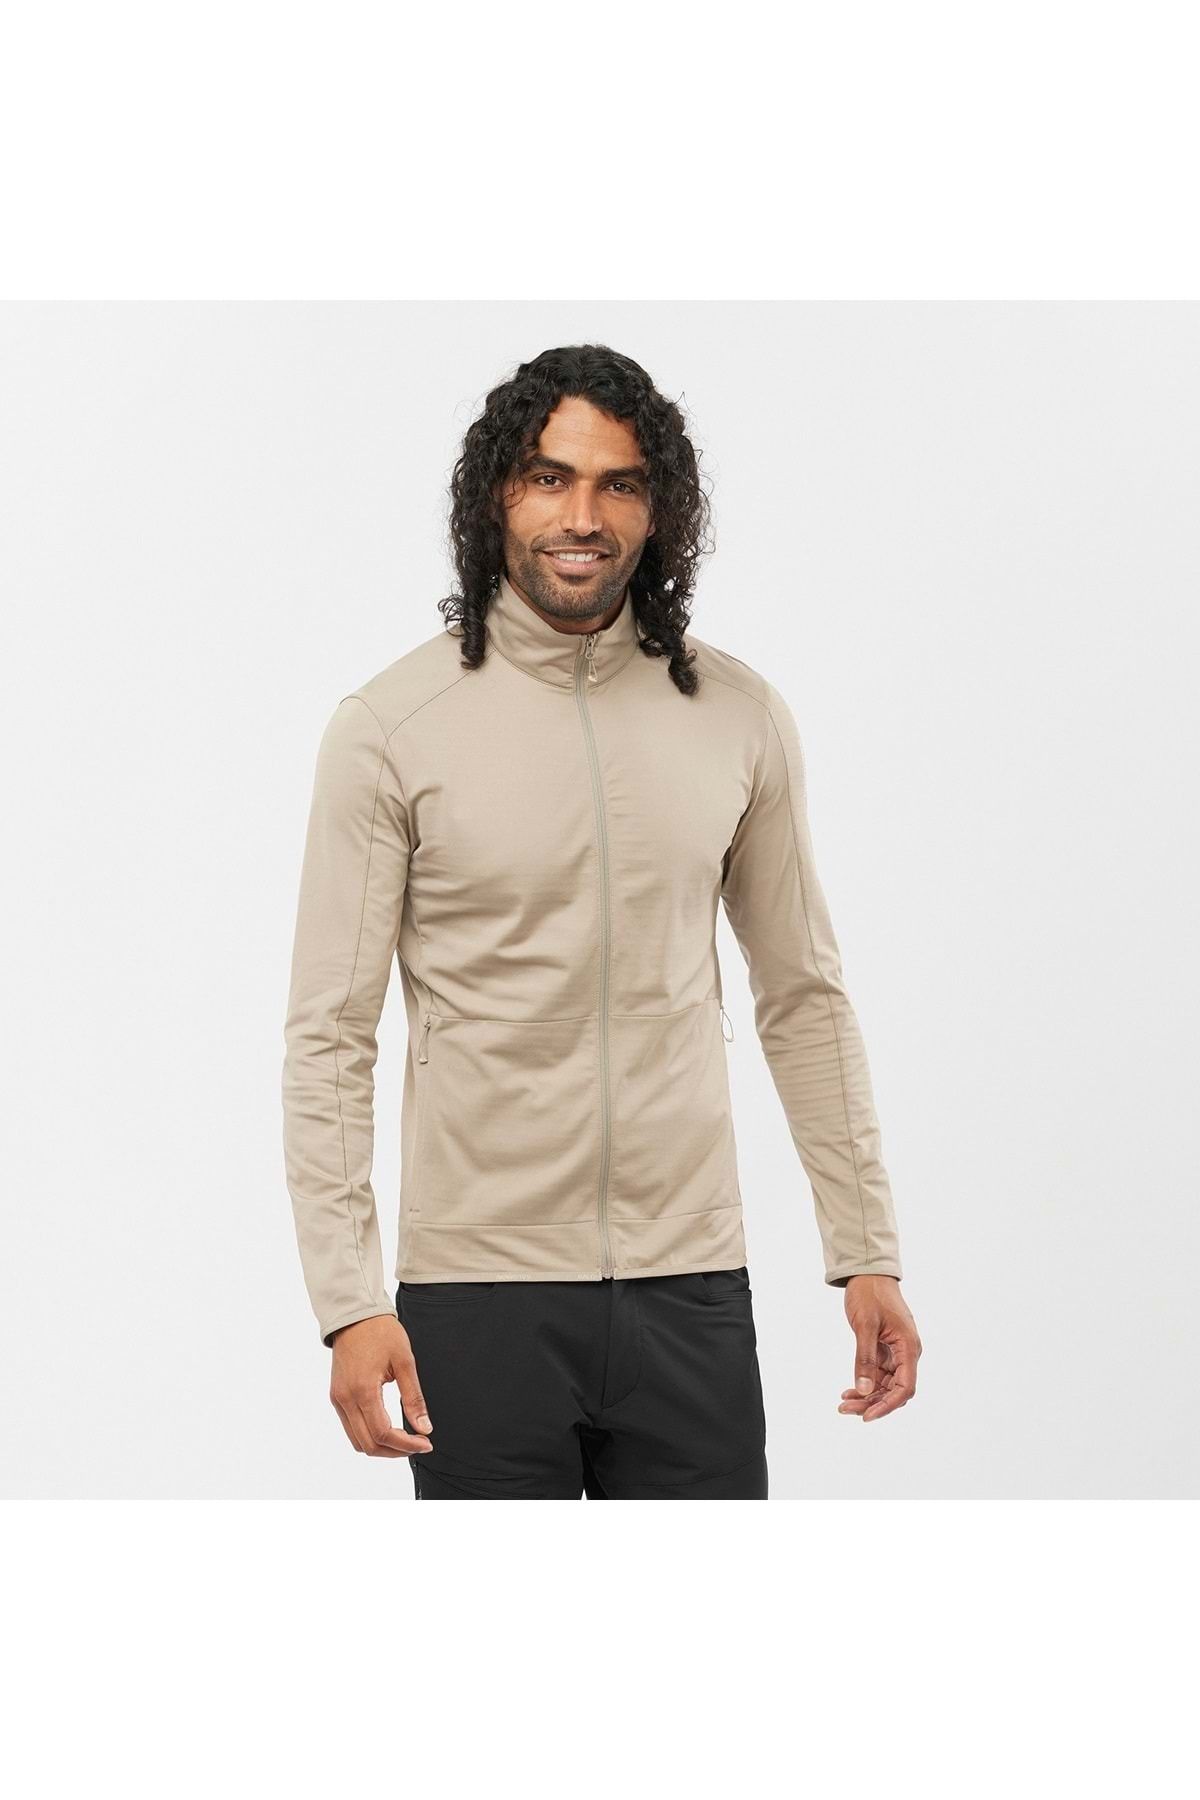 Salomon Outrack Full Zip Mid Fleece Midlayer Lc1863100 Erkek Sweatshirt Ceket Bej